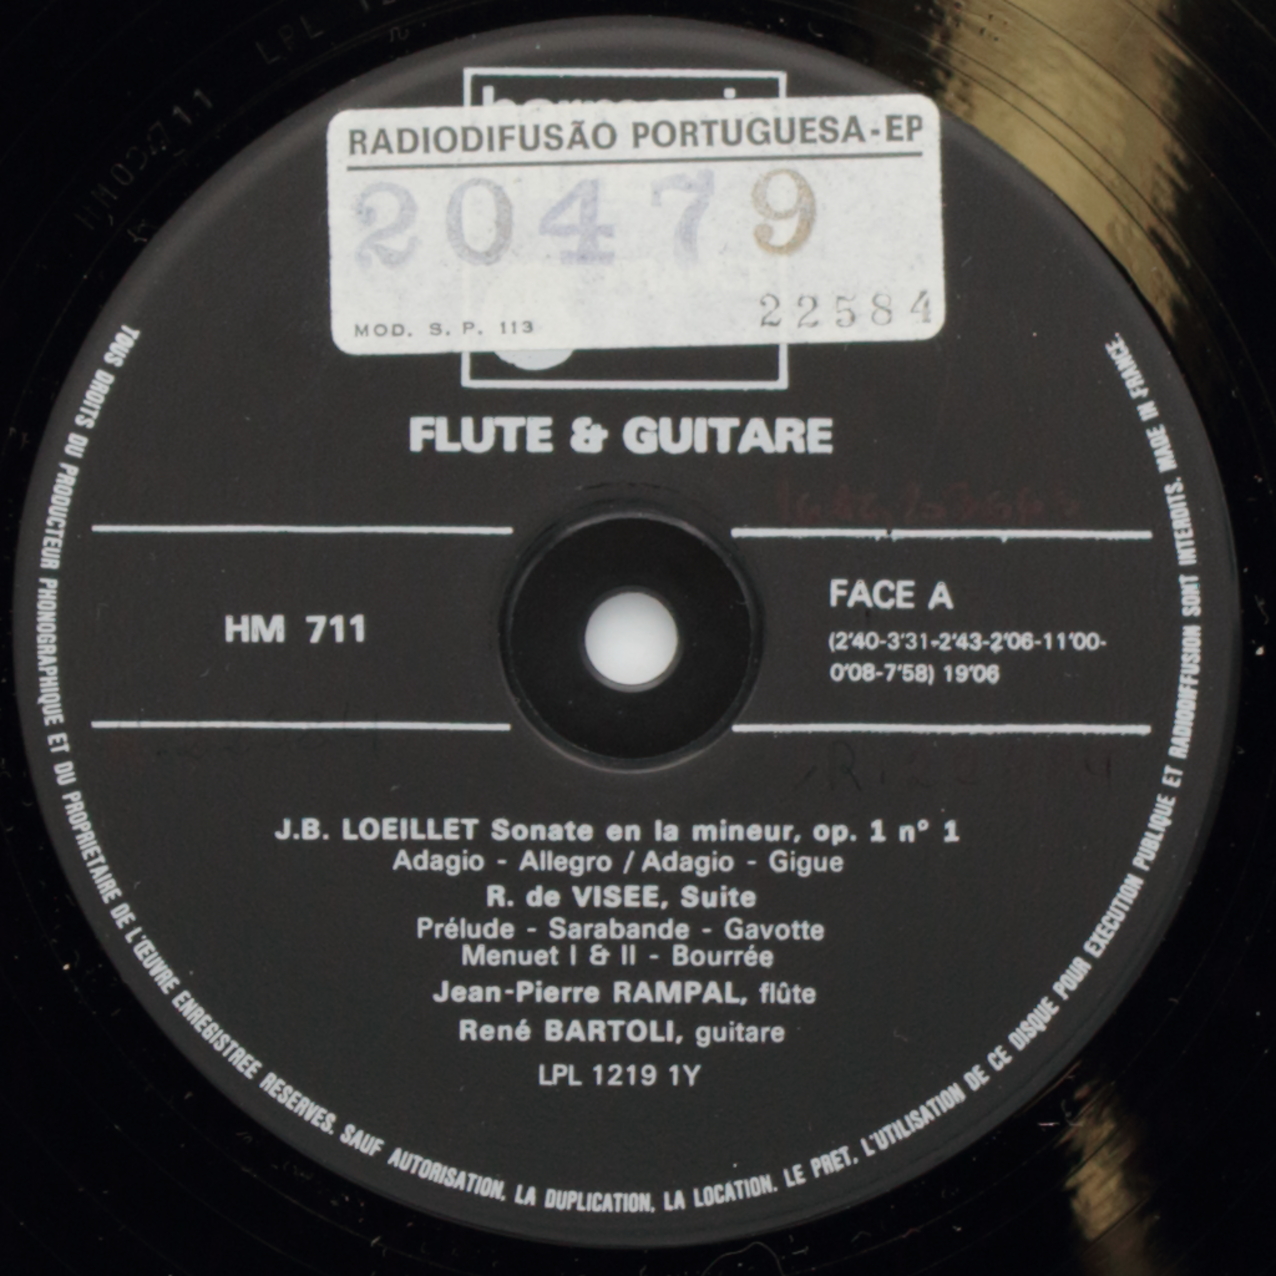 Flute & Guitare